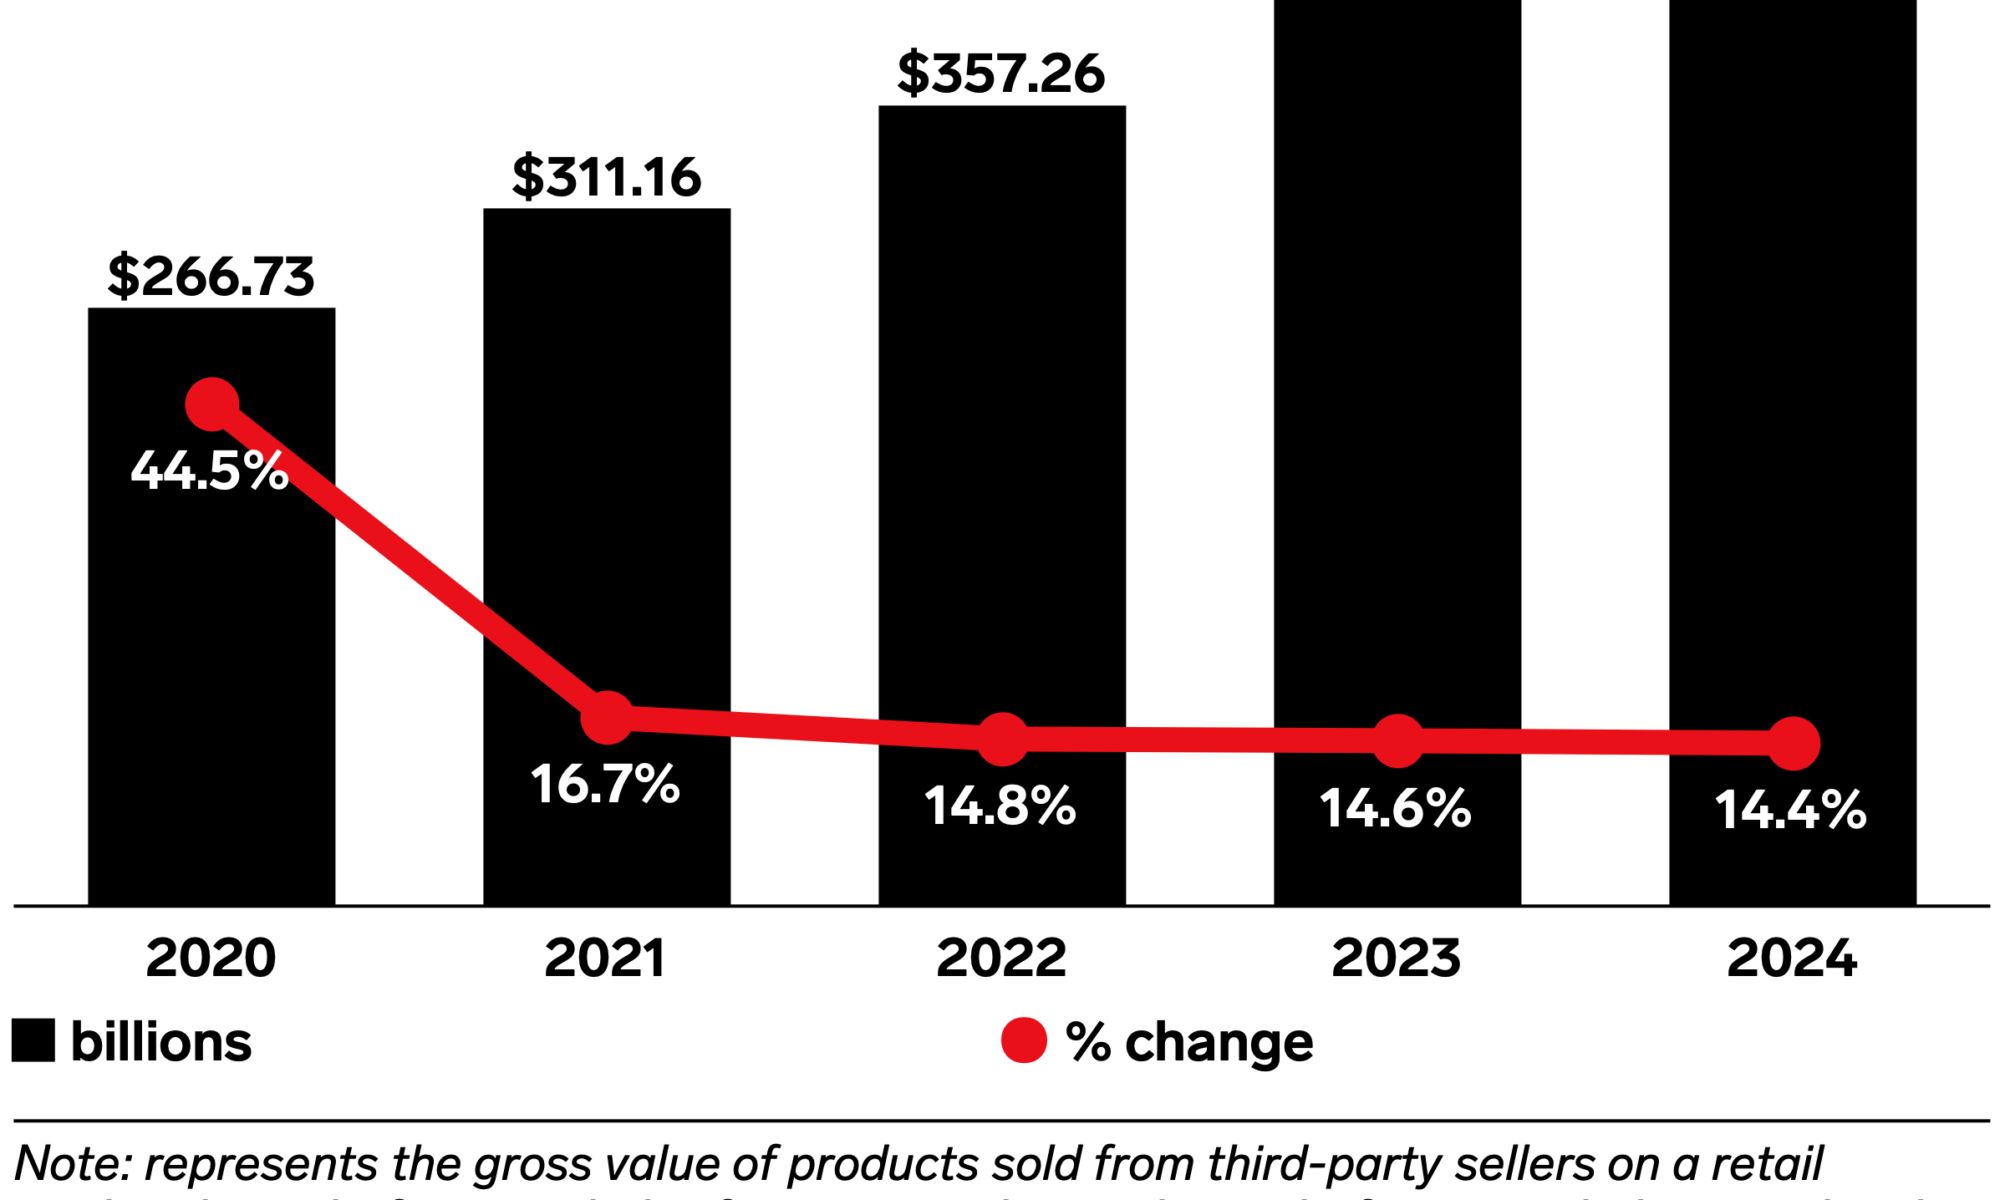 US marketplace ecommerce sales will reach over $357 billion despite decelerating growth